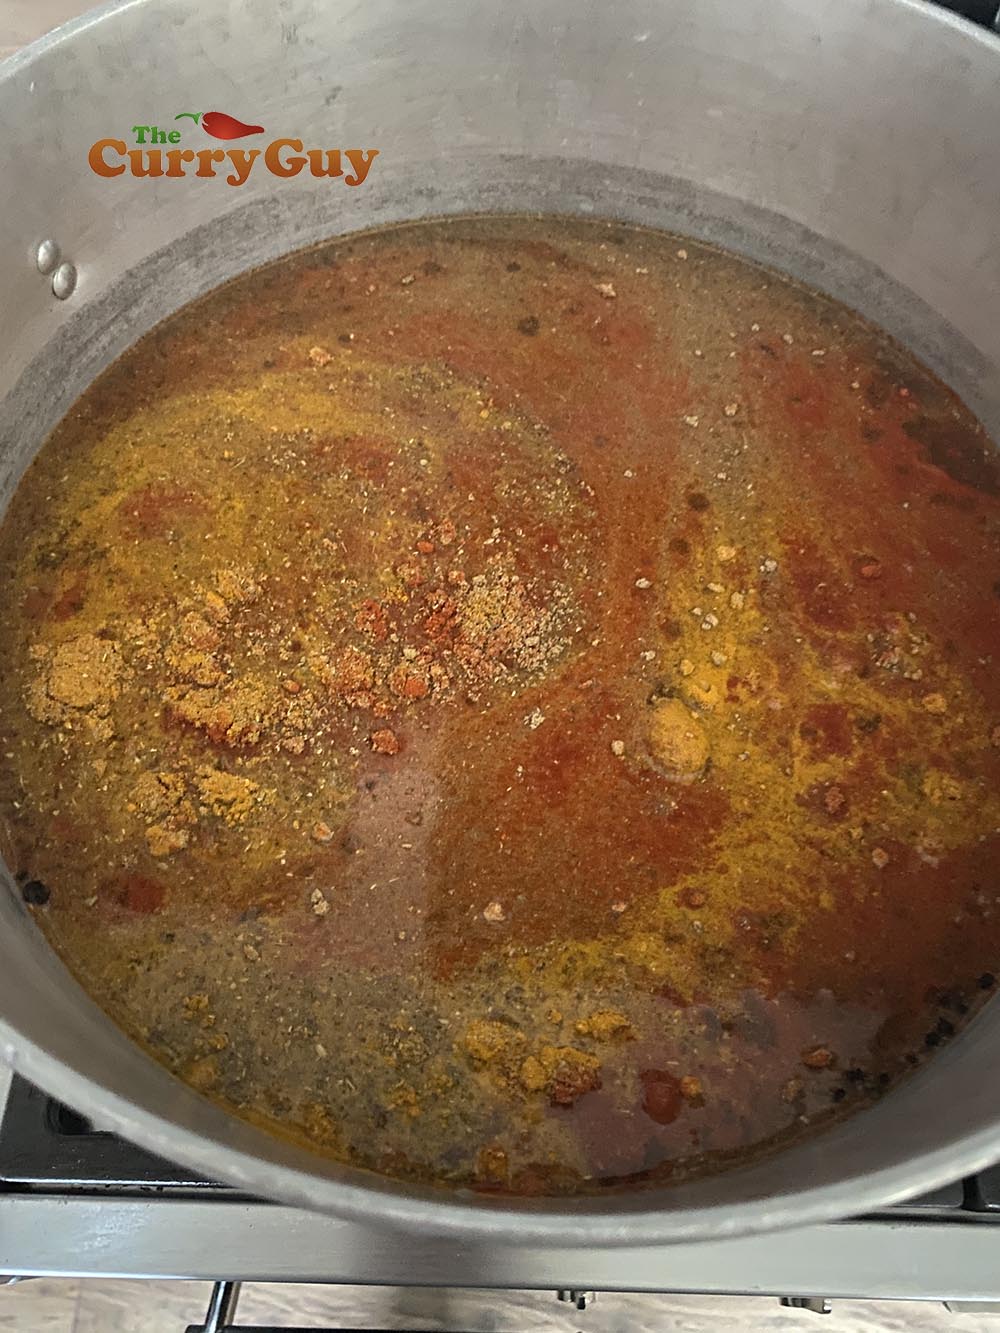 Bringing seasoned water to a boil